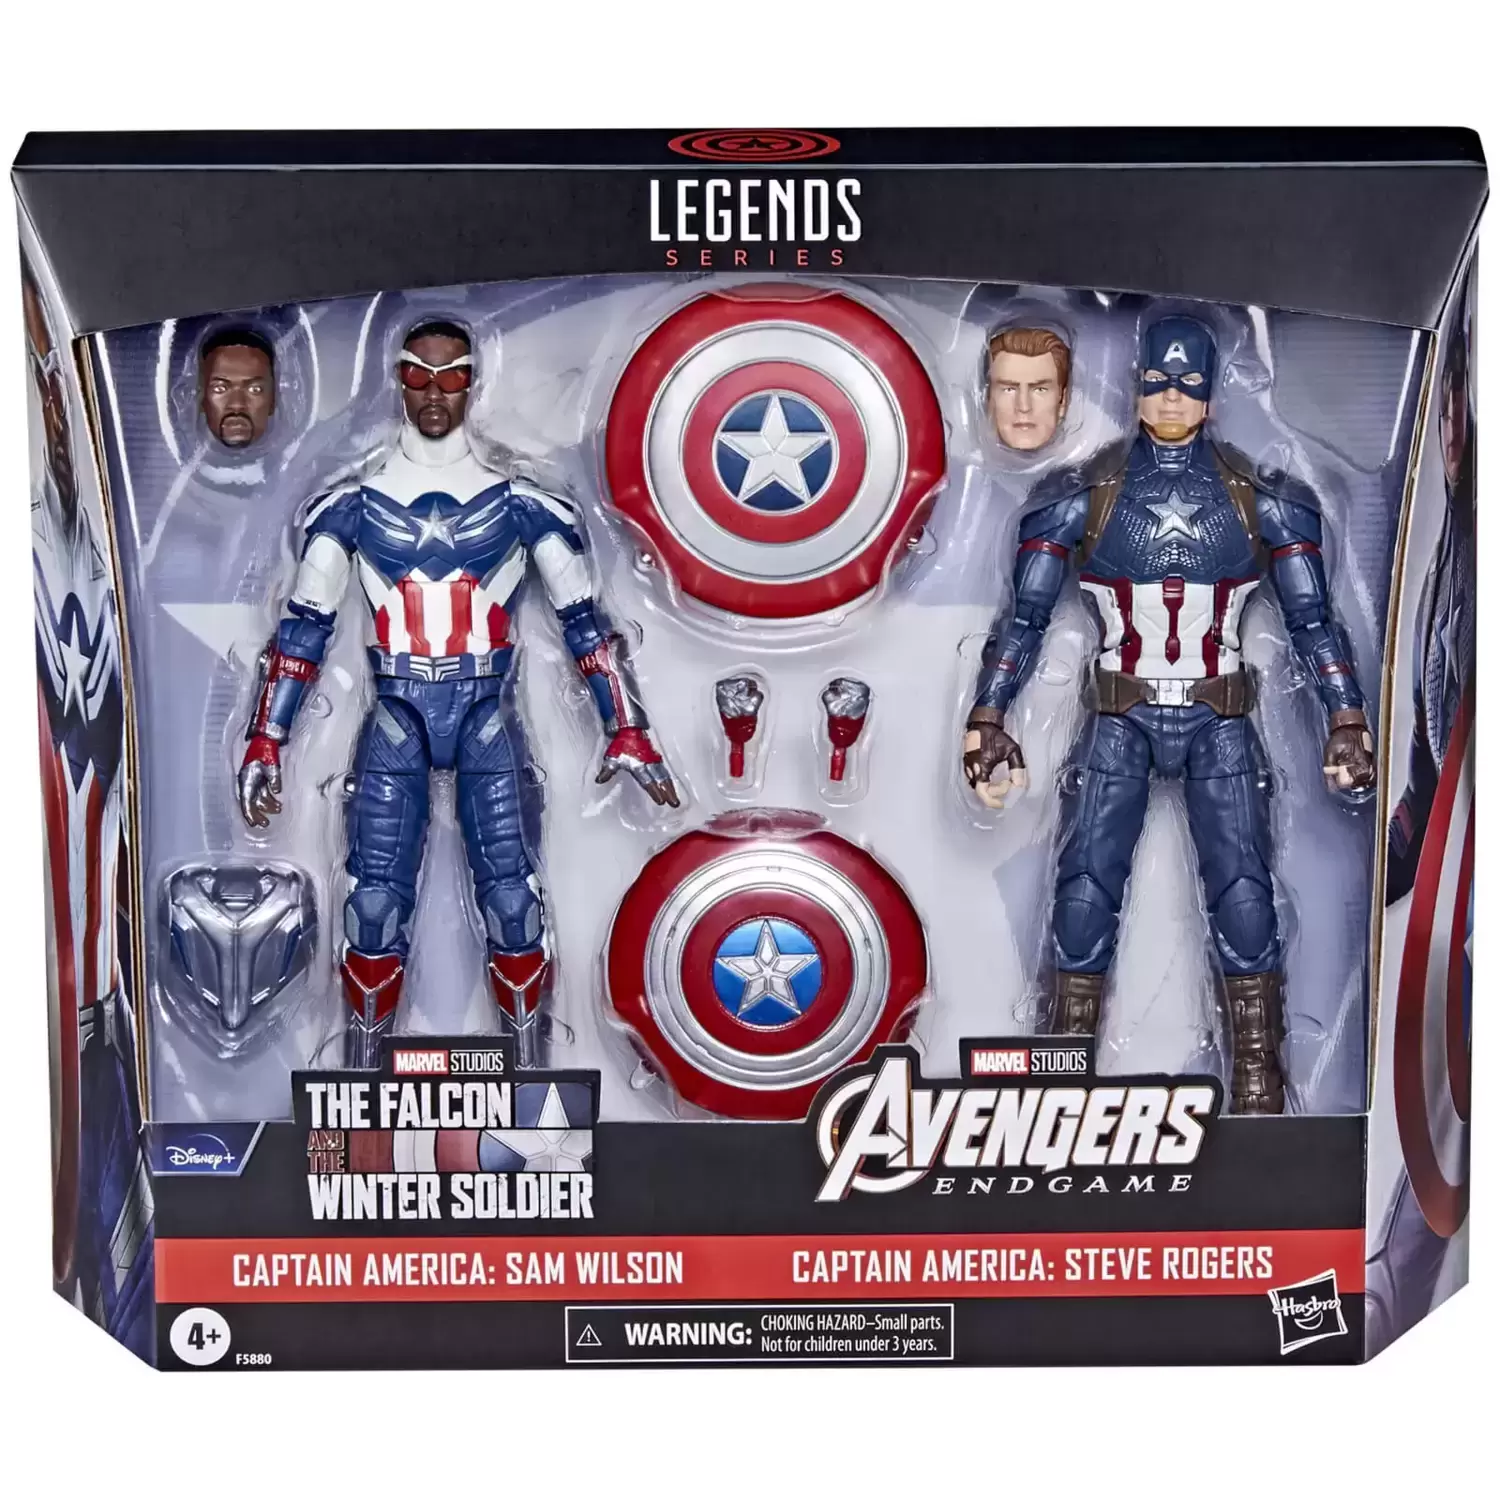 Captain America Marvel Figurine from New in Box Schleich Plastic Figure 21503 